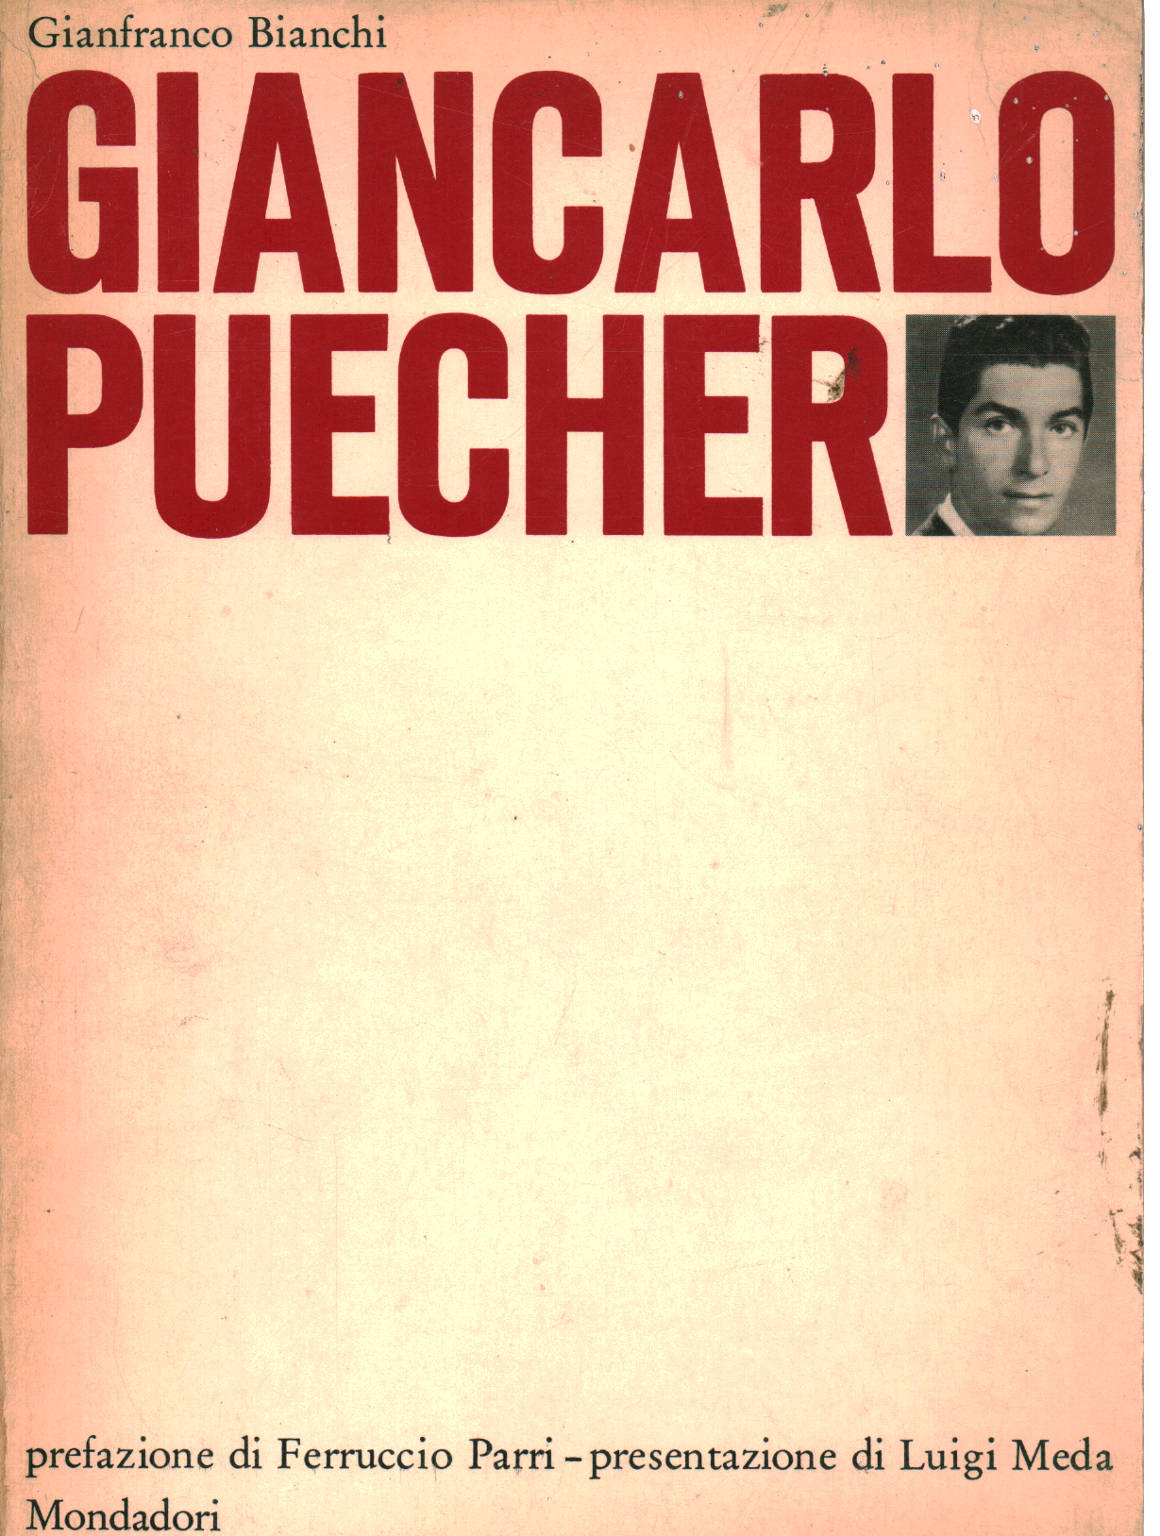 Giancarlo Pücher